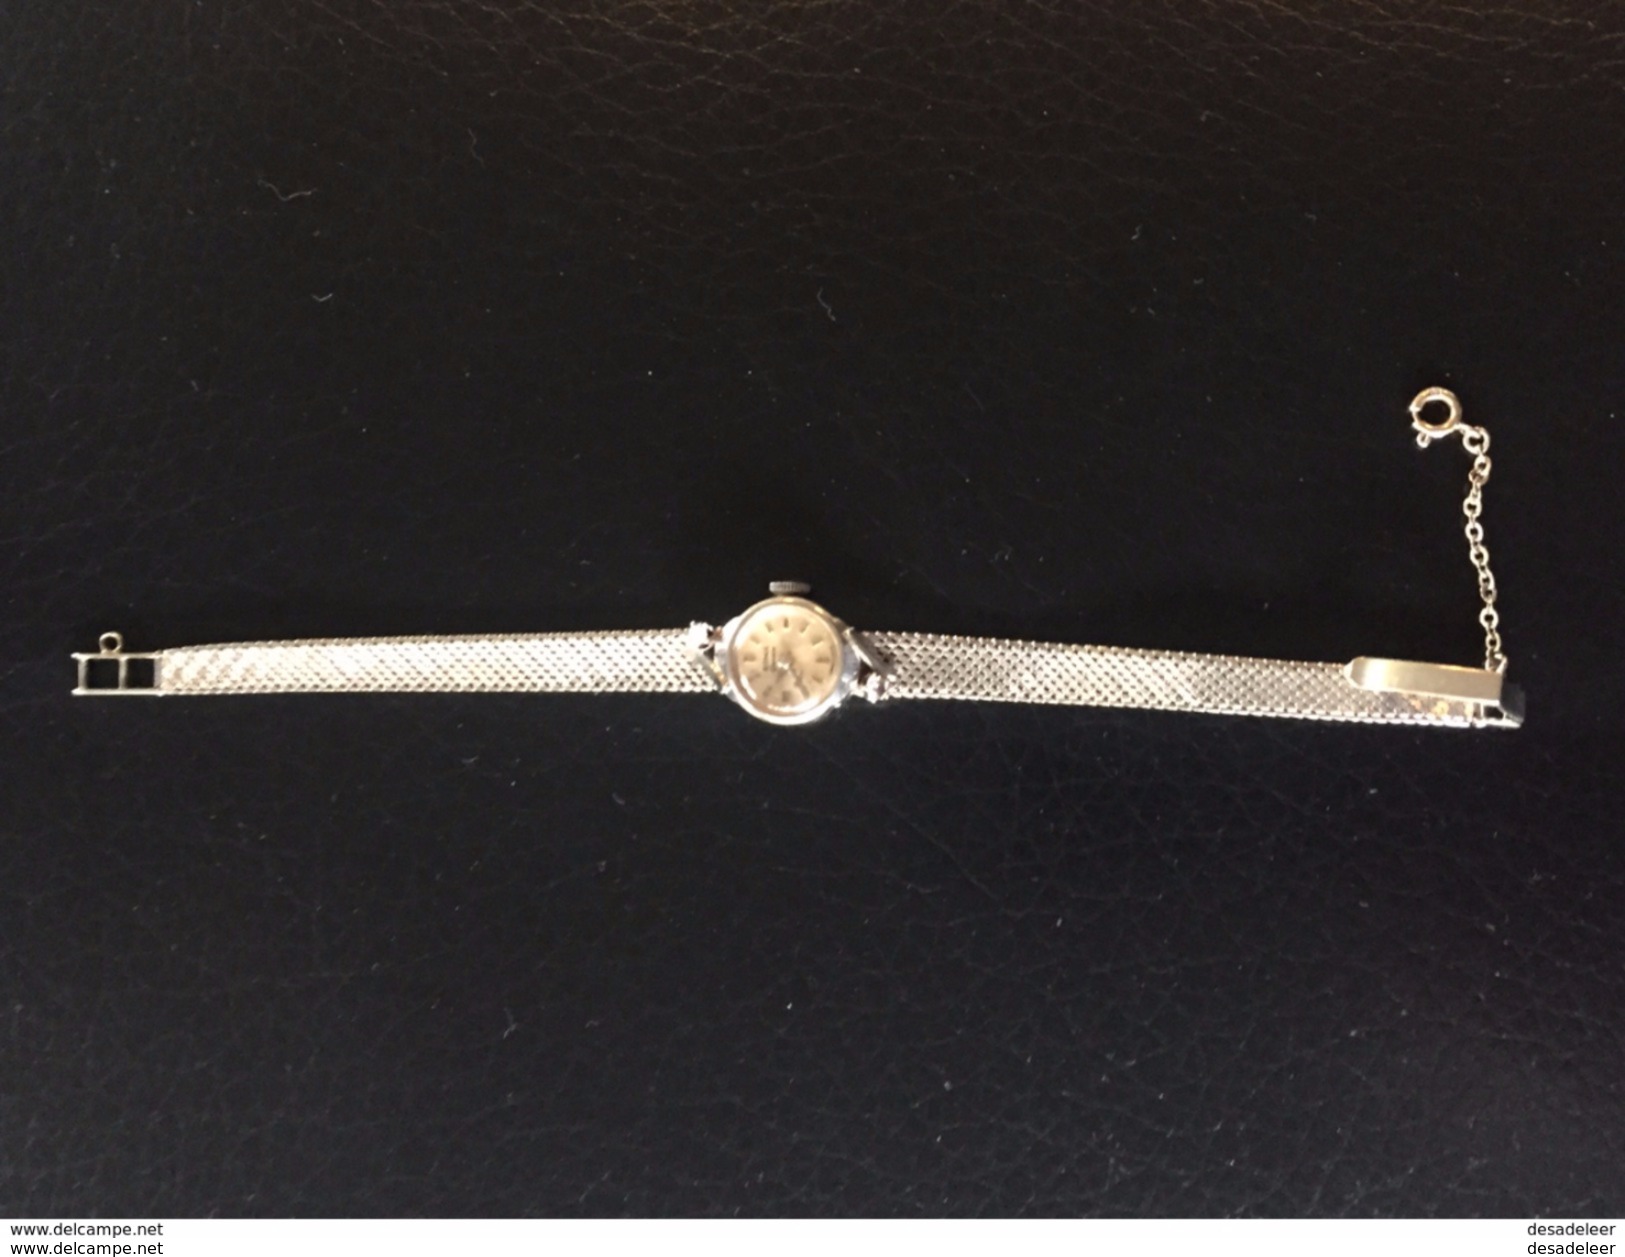 Blanc diamant d'or dames bracelet montre - White gold diamond ladies bracelet watch - Roma Geneva -